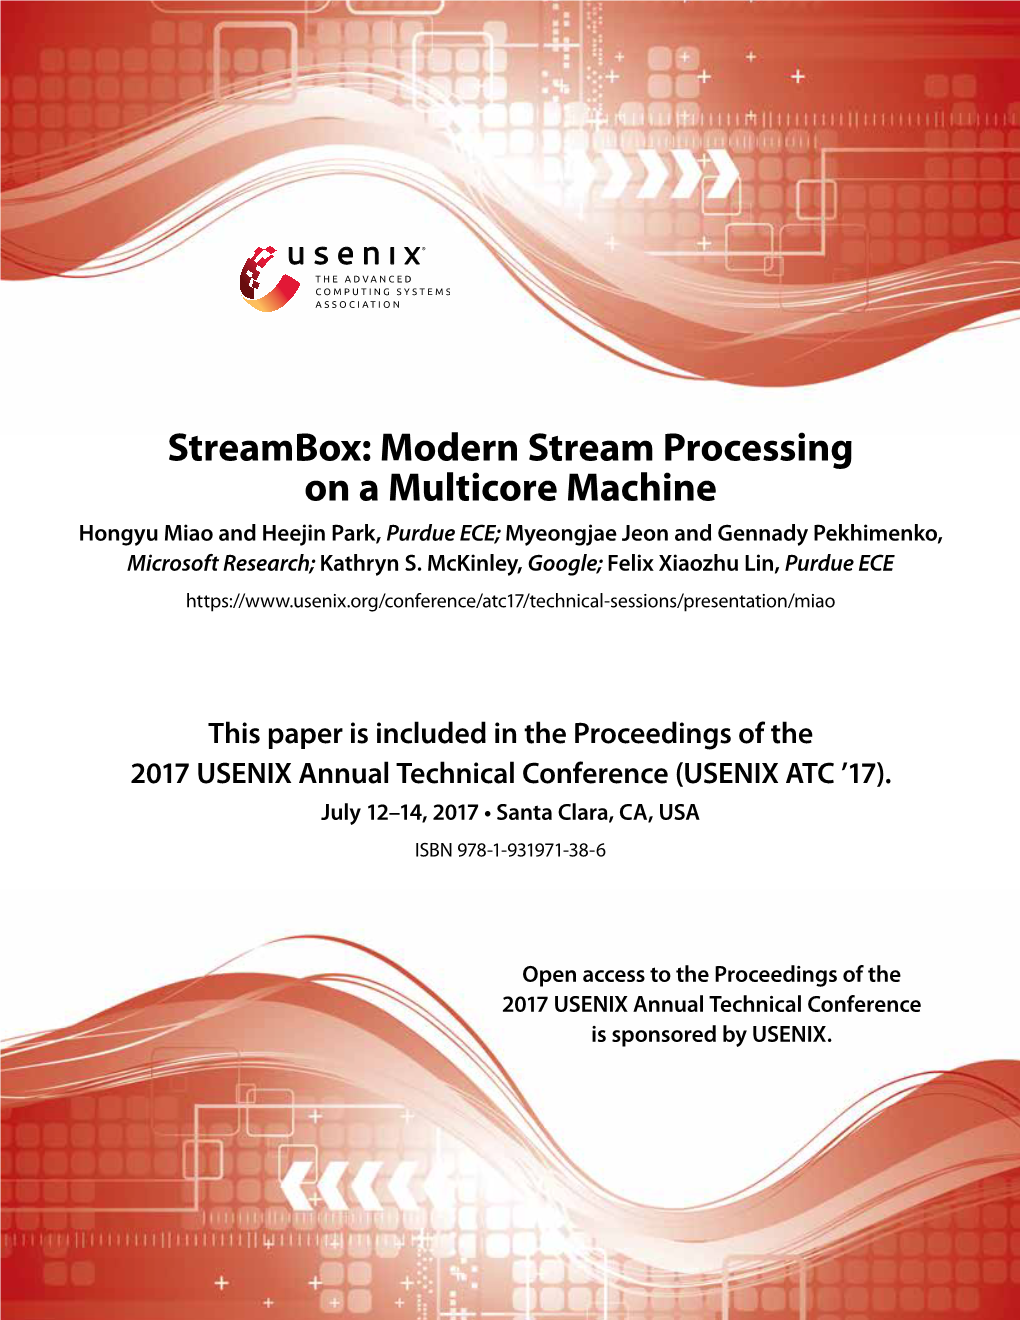 Streambox: Modern Stream Processing on a Multicore Machine